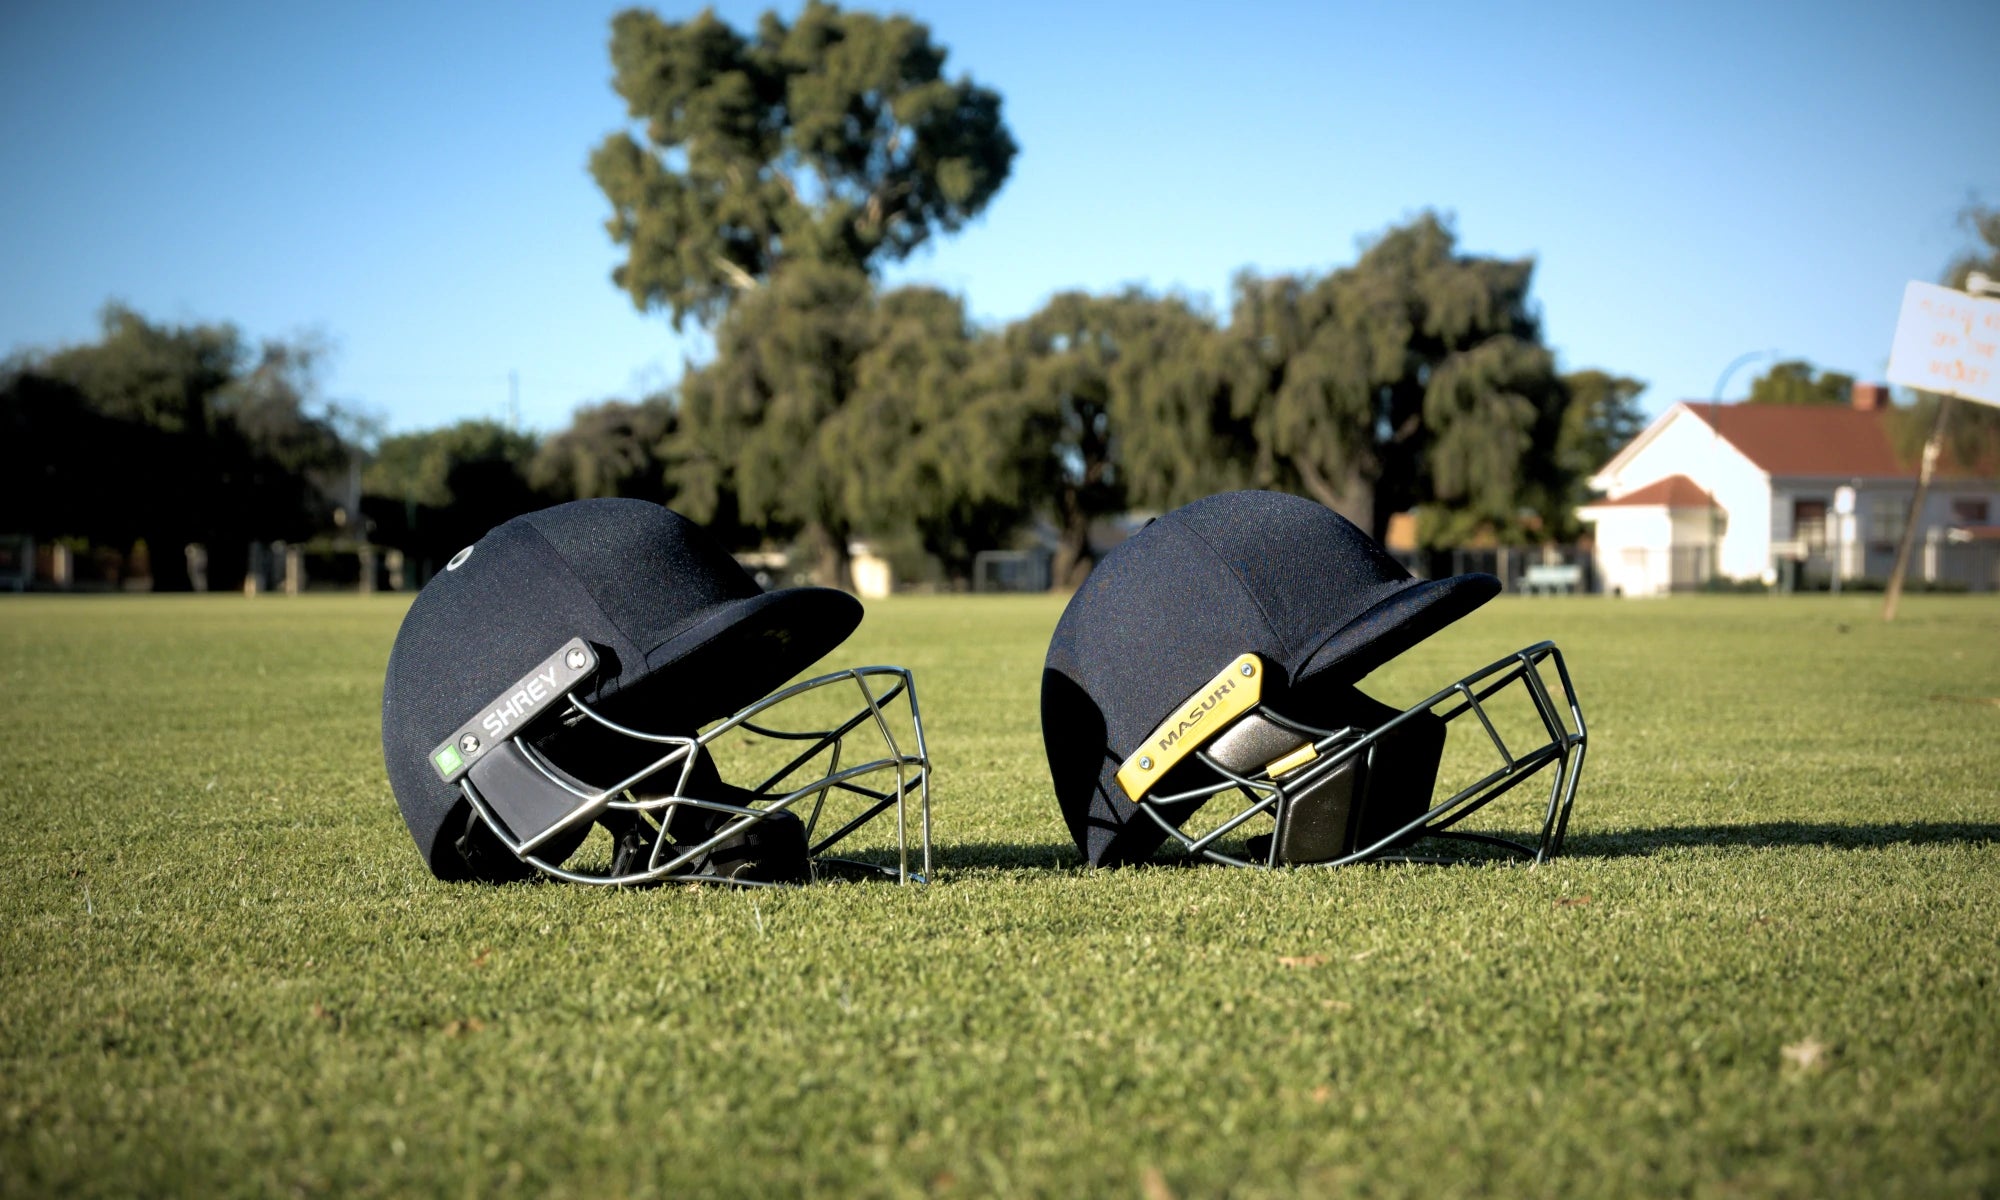 Adult Cricket Helmets